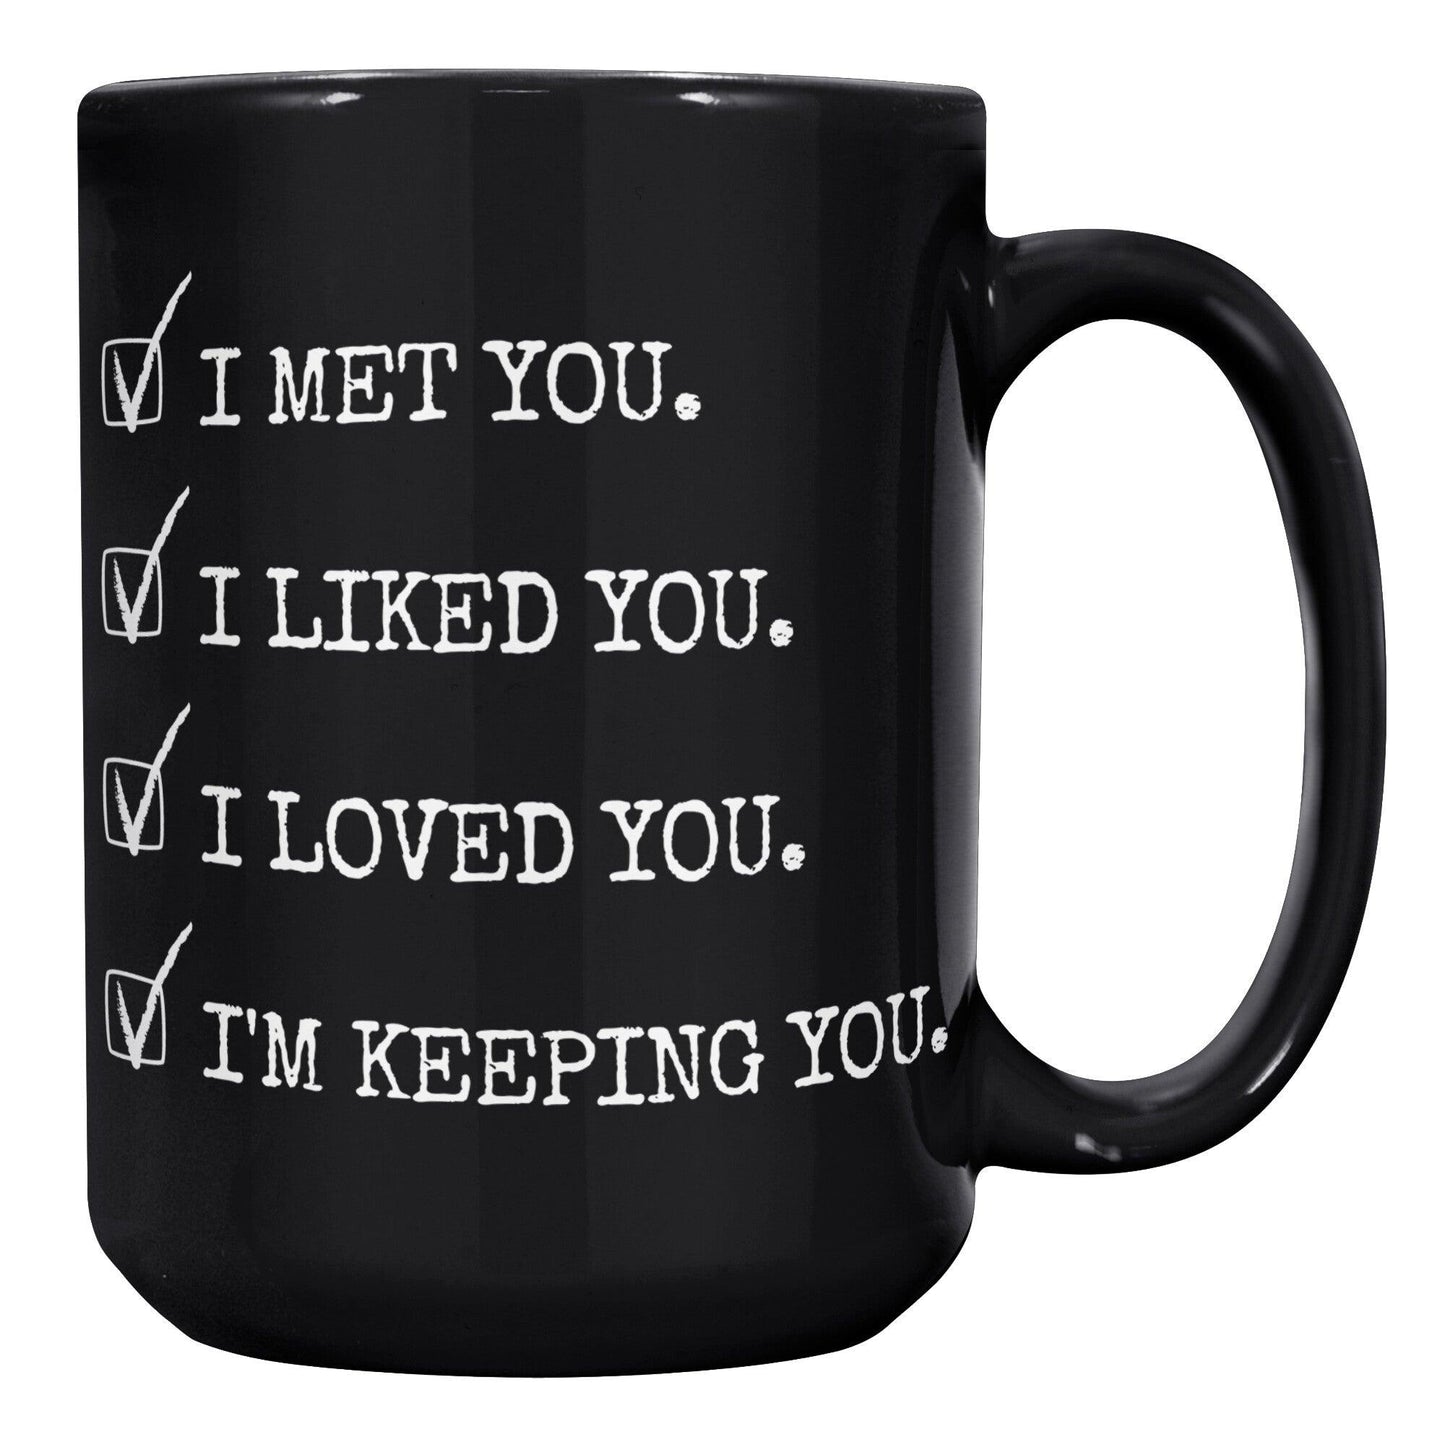 I Met You. I Liked You. I Loved You. I'm Keeping You. Black Mug - TheGivenGet